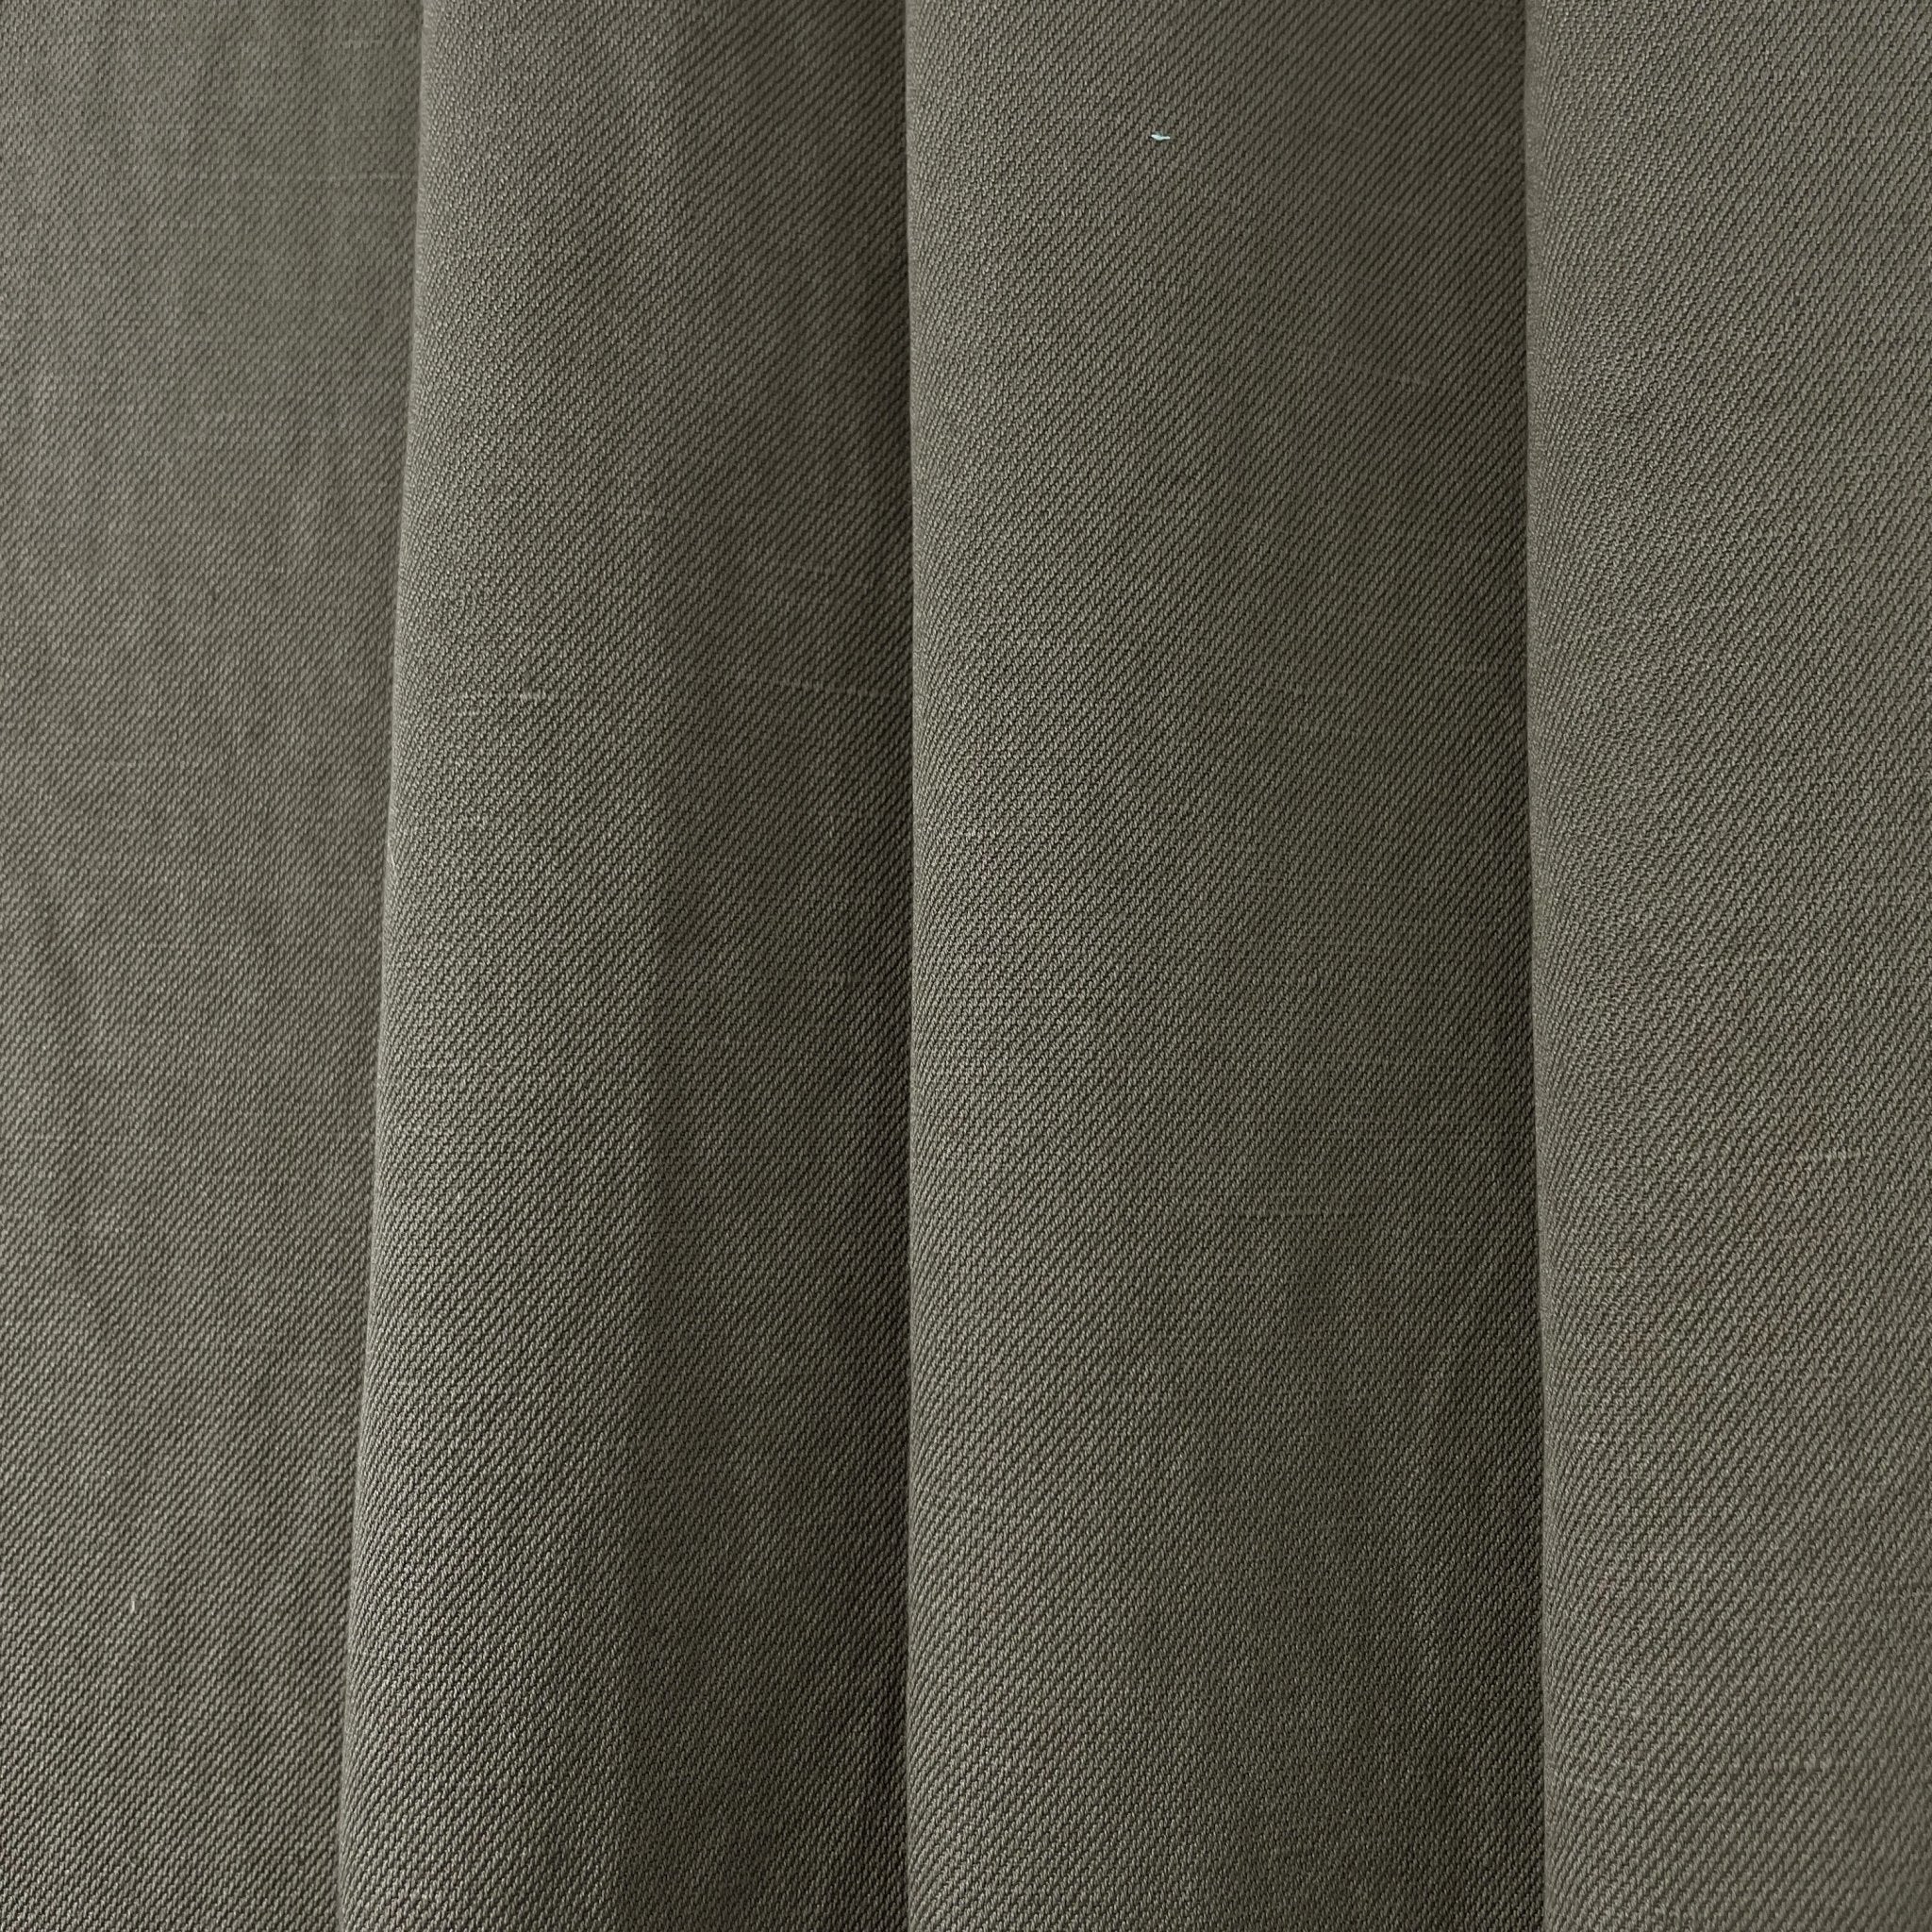 Linen Cotton Twill Fabric 7157 6943 - The Linen Lab - 6943 KHAKI